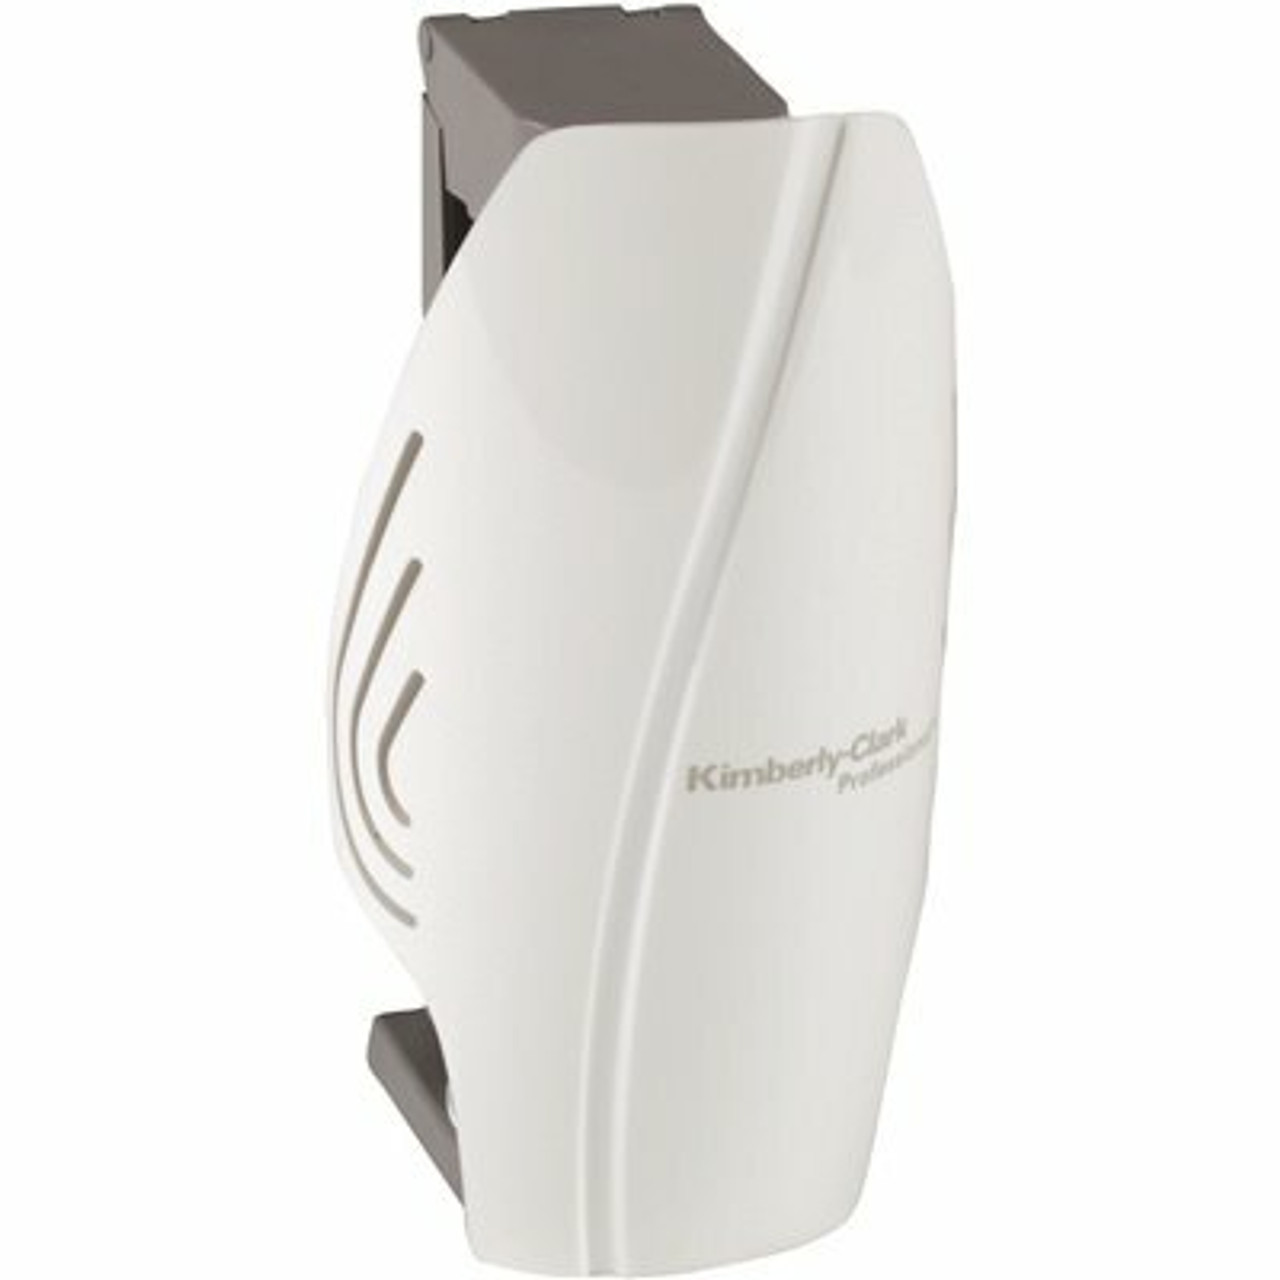 Kimberly-Clark Automatic Air Freshener Dispenser, White